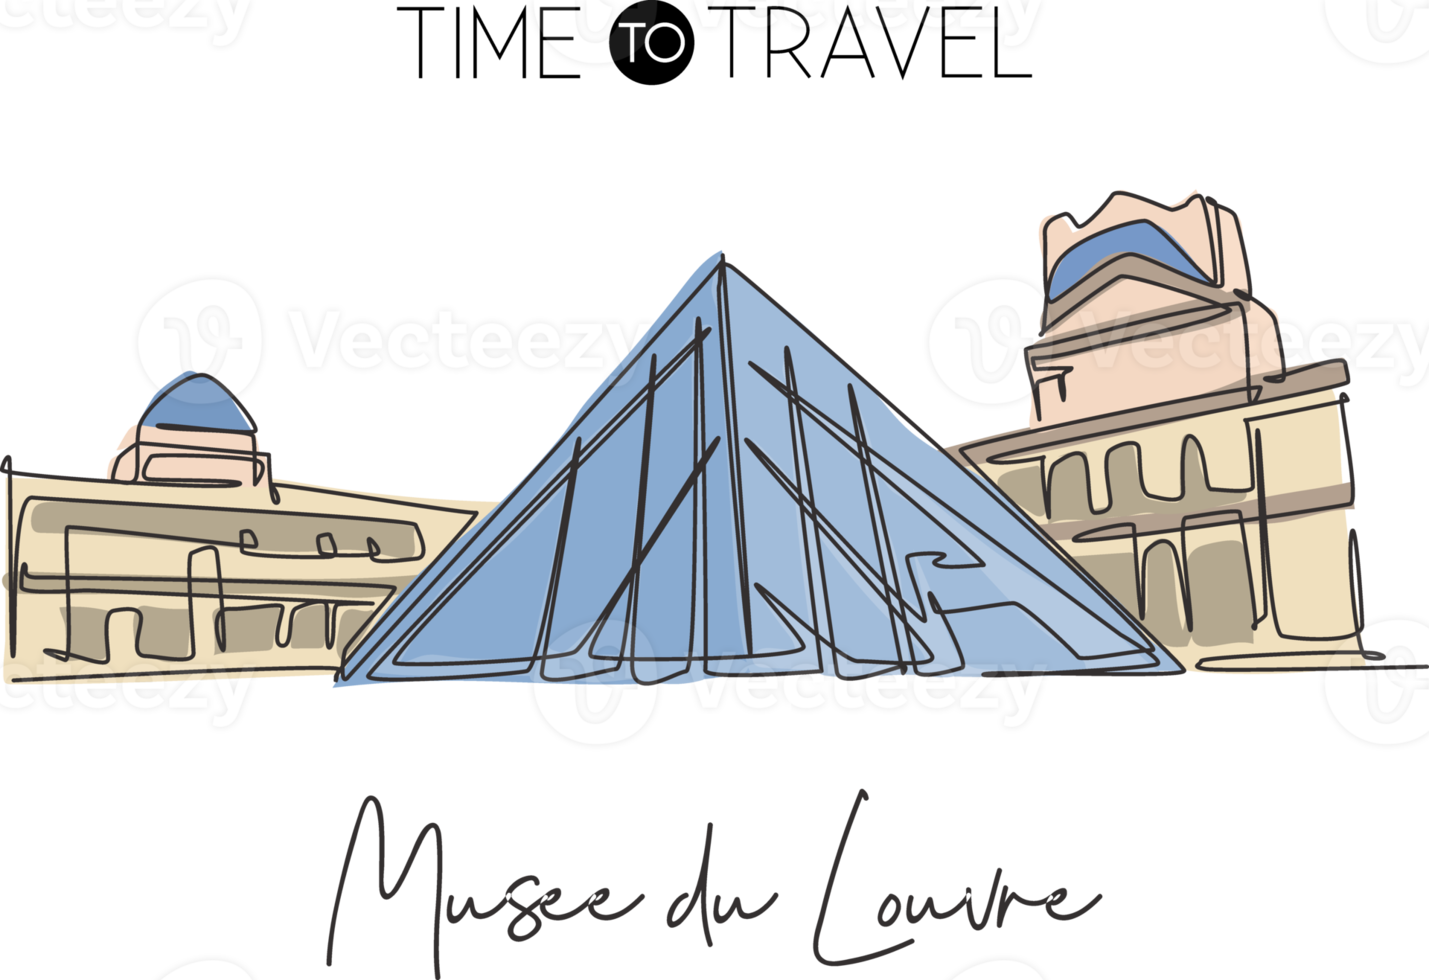 uno continuo línea dibujo de Bienvenido a museo du lumbrera o lumbrera museo. mundo icónico sitio en París, Francia. pared decoración póster impresión concepto. vector ilustración png